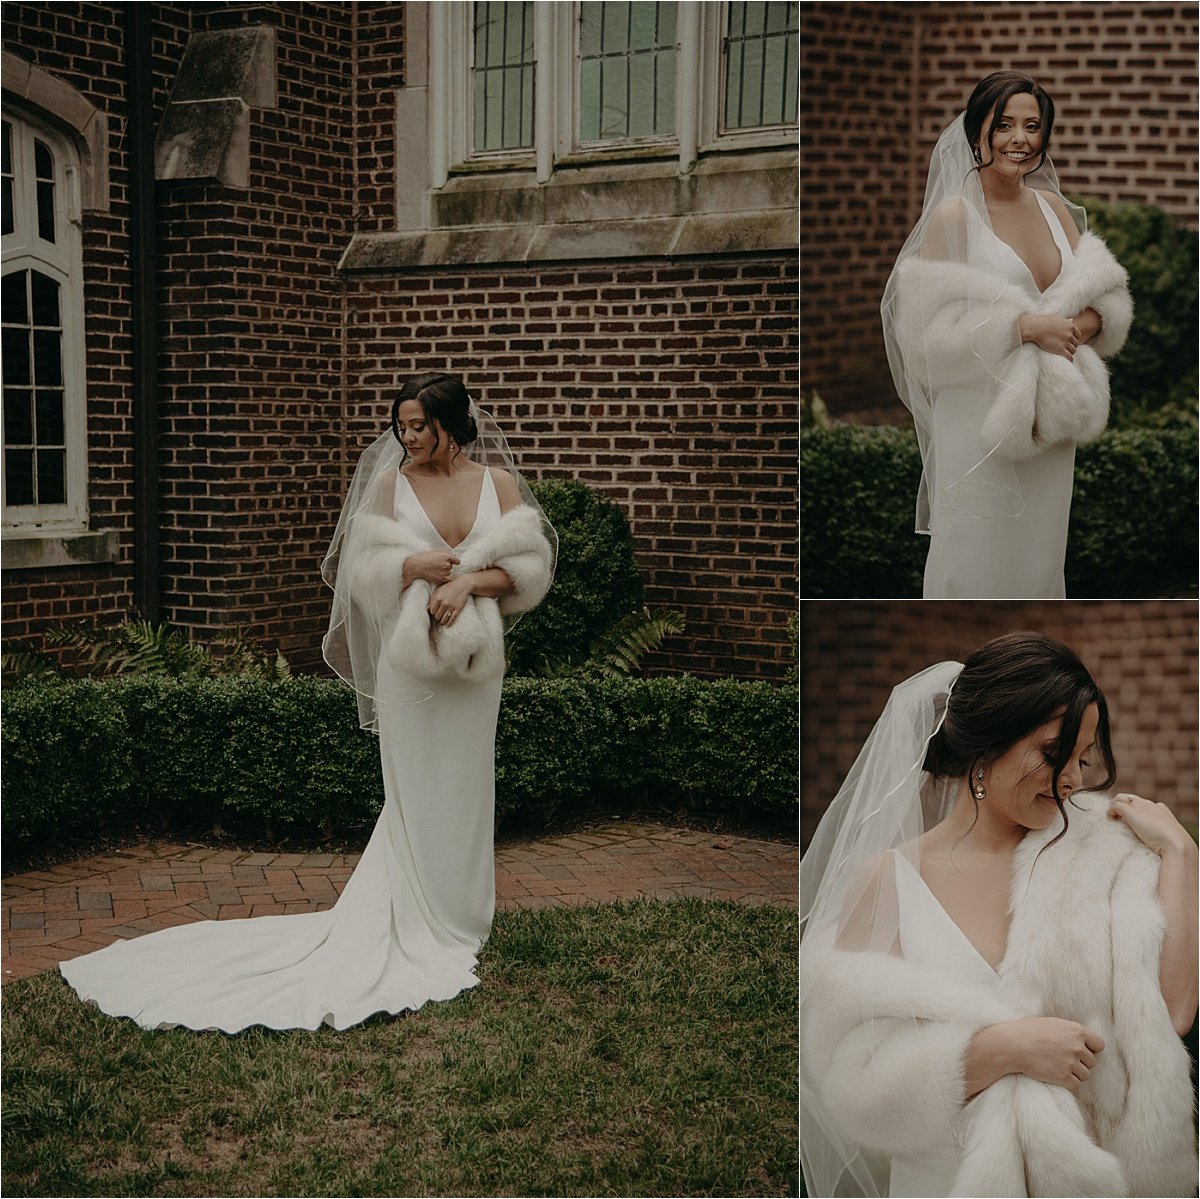 The bride wore an heirloom fur shawl to keep warm